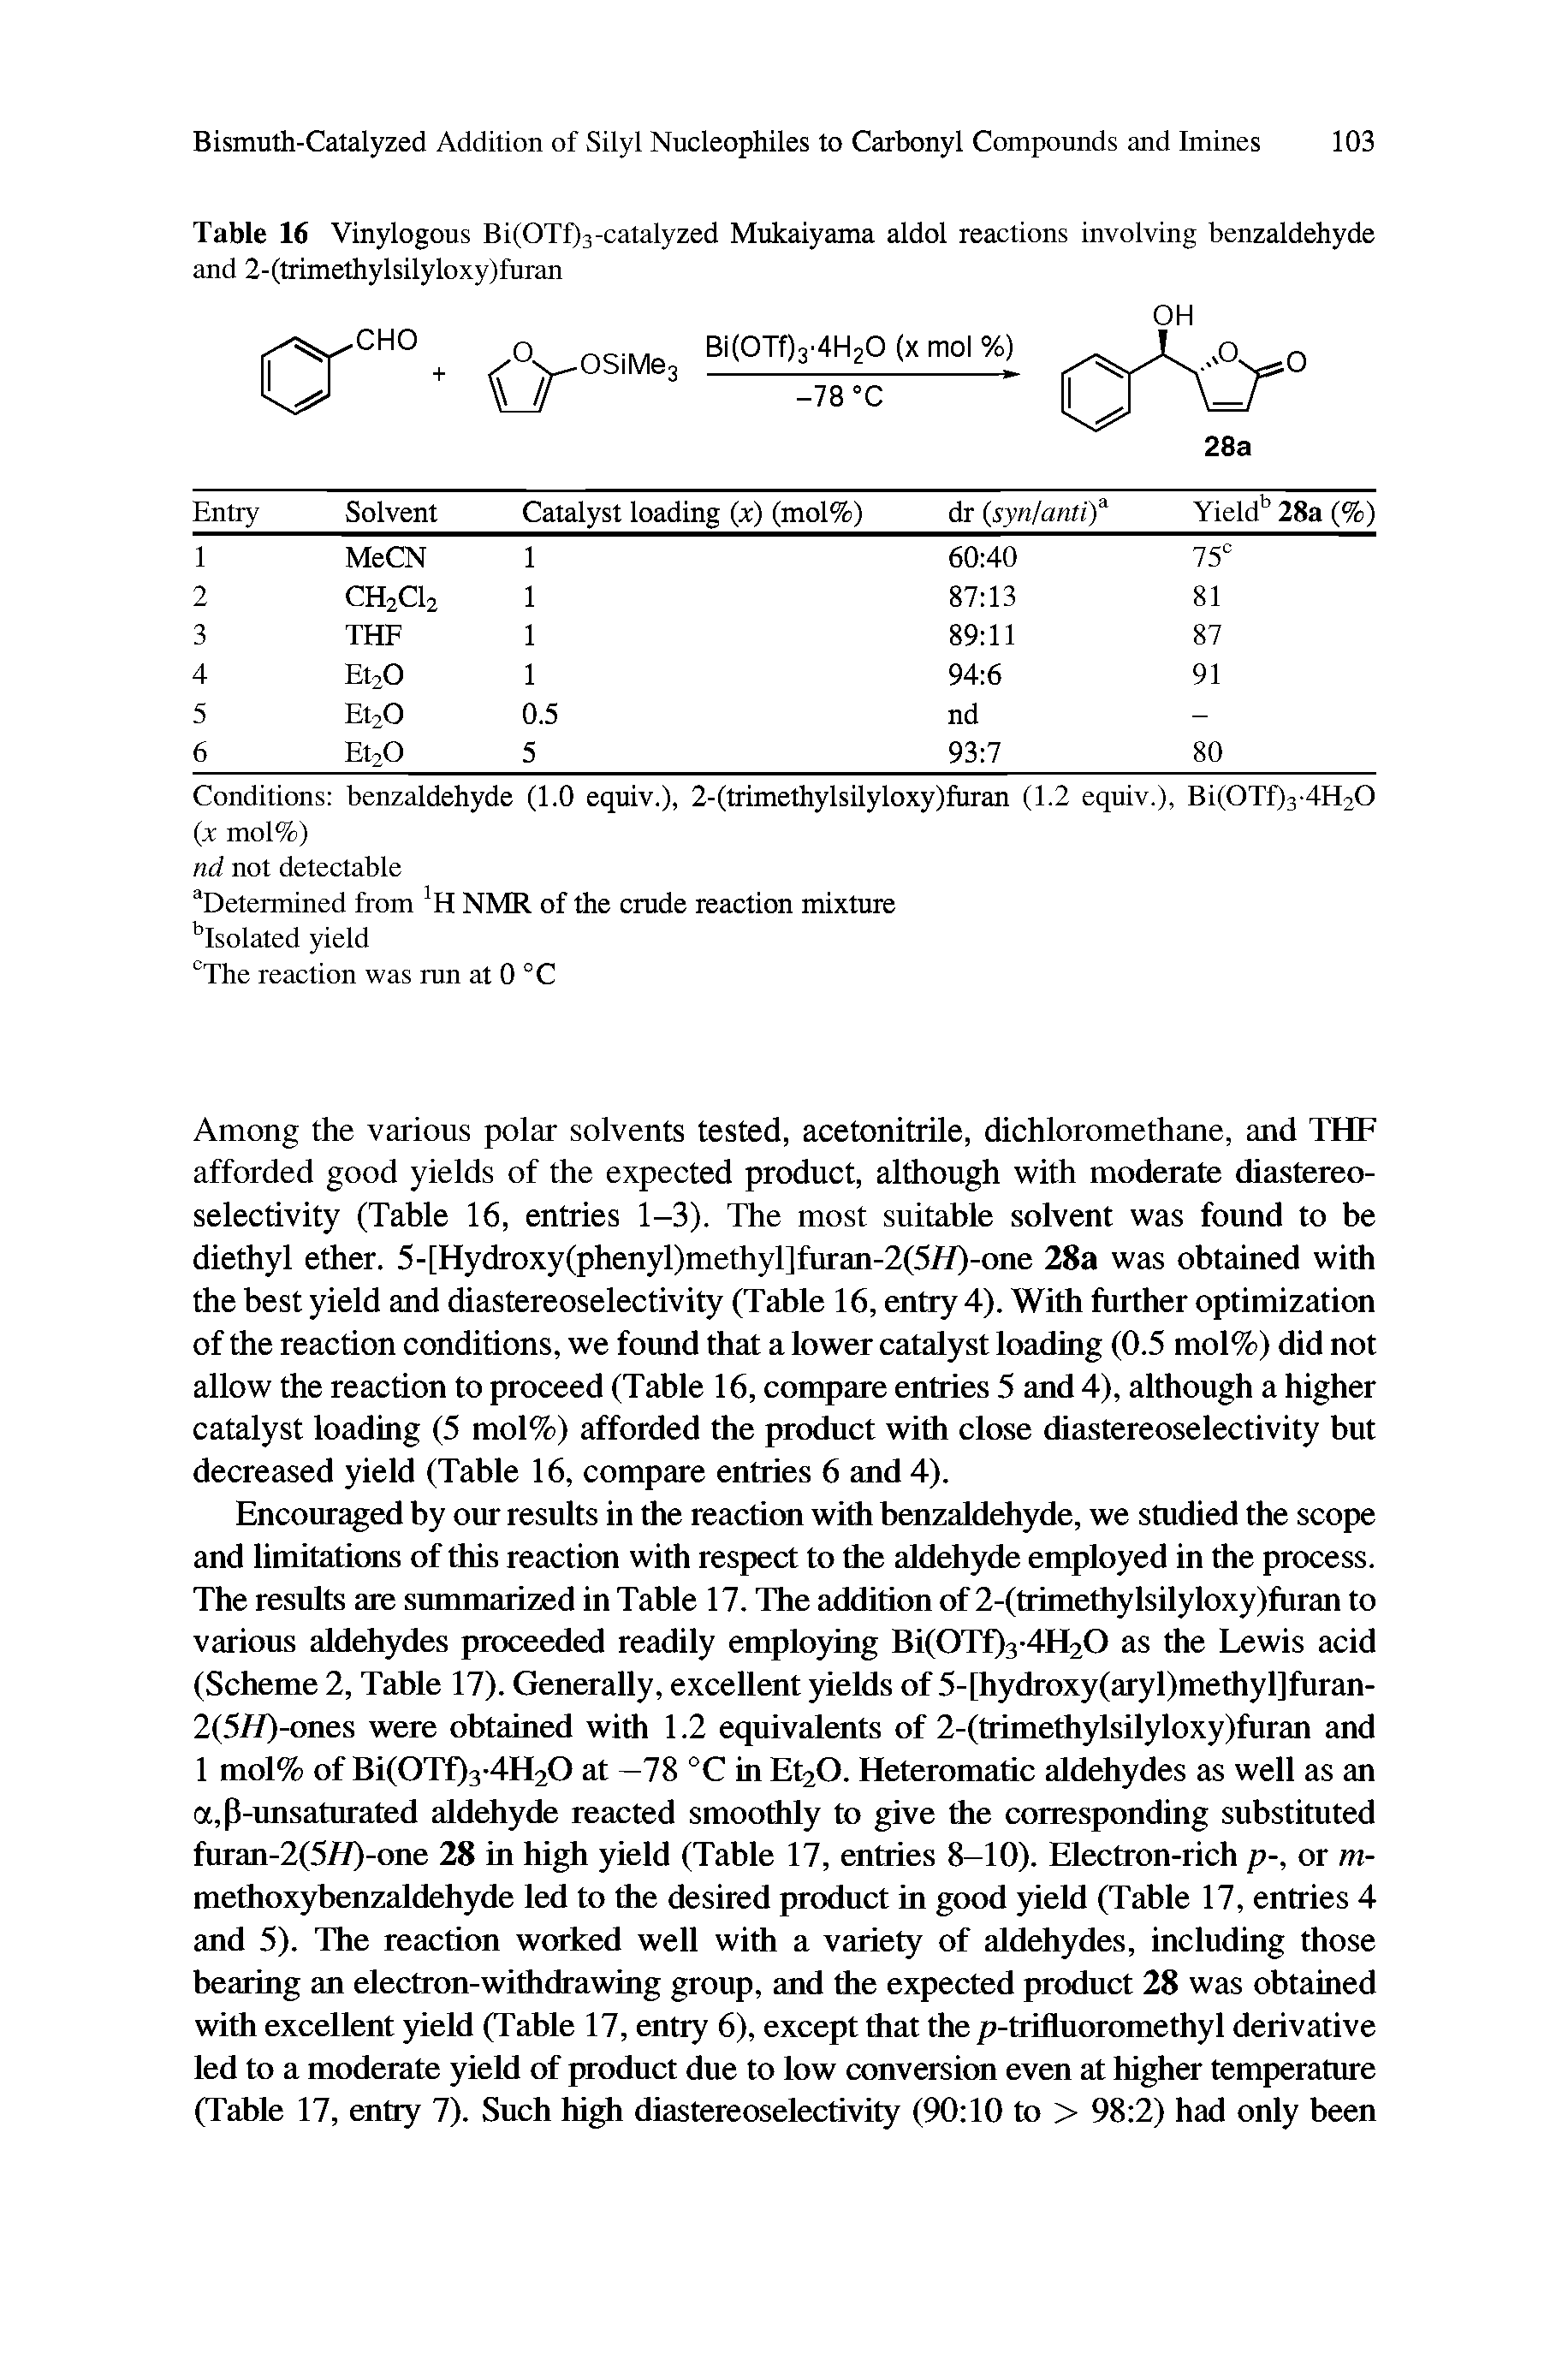 Table 16 Vinylogous Bi(OTf)3-catalyzed Mukaiyama aldol reactions involving benzaldehyde and 2-(trimethylsilyloxy)furan...